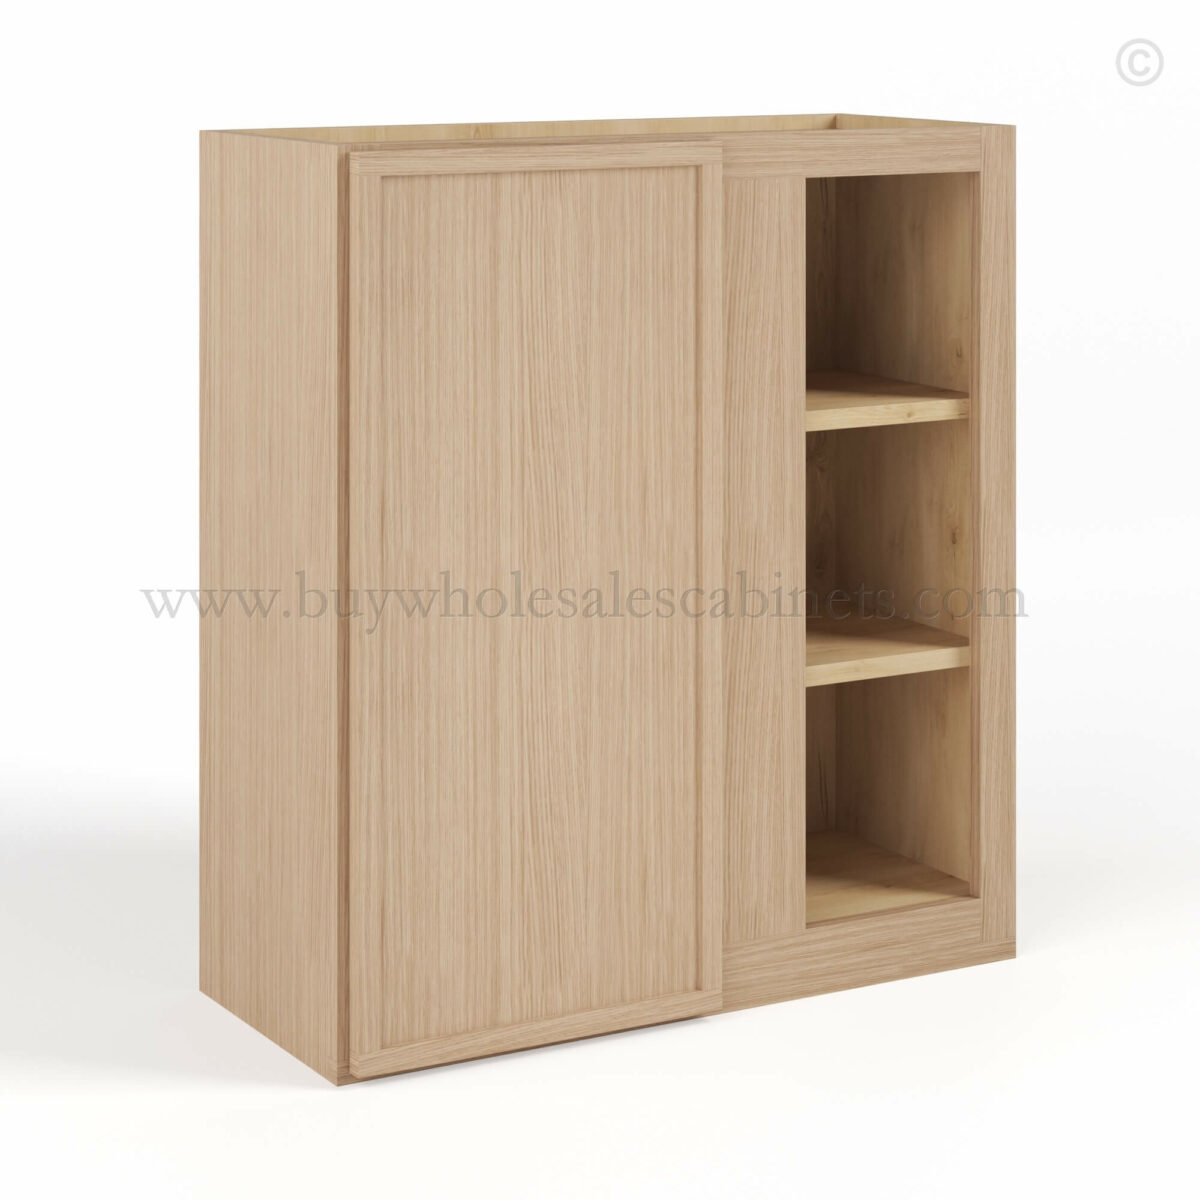 Slim Oak Shaker Blind Corner Wall Cabinet, rta cabinets, wholesale cabinets